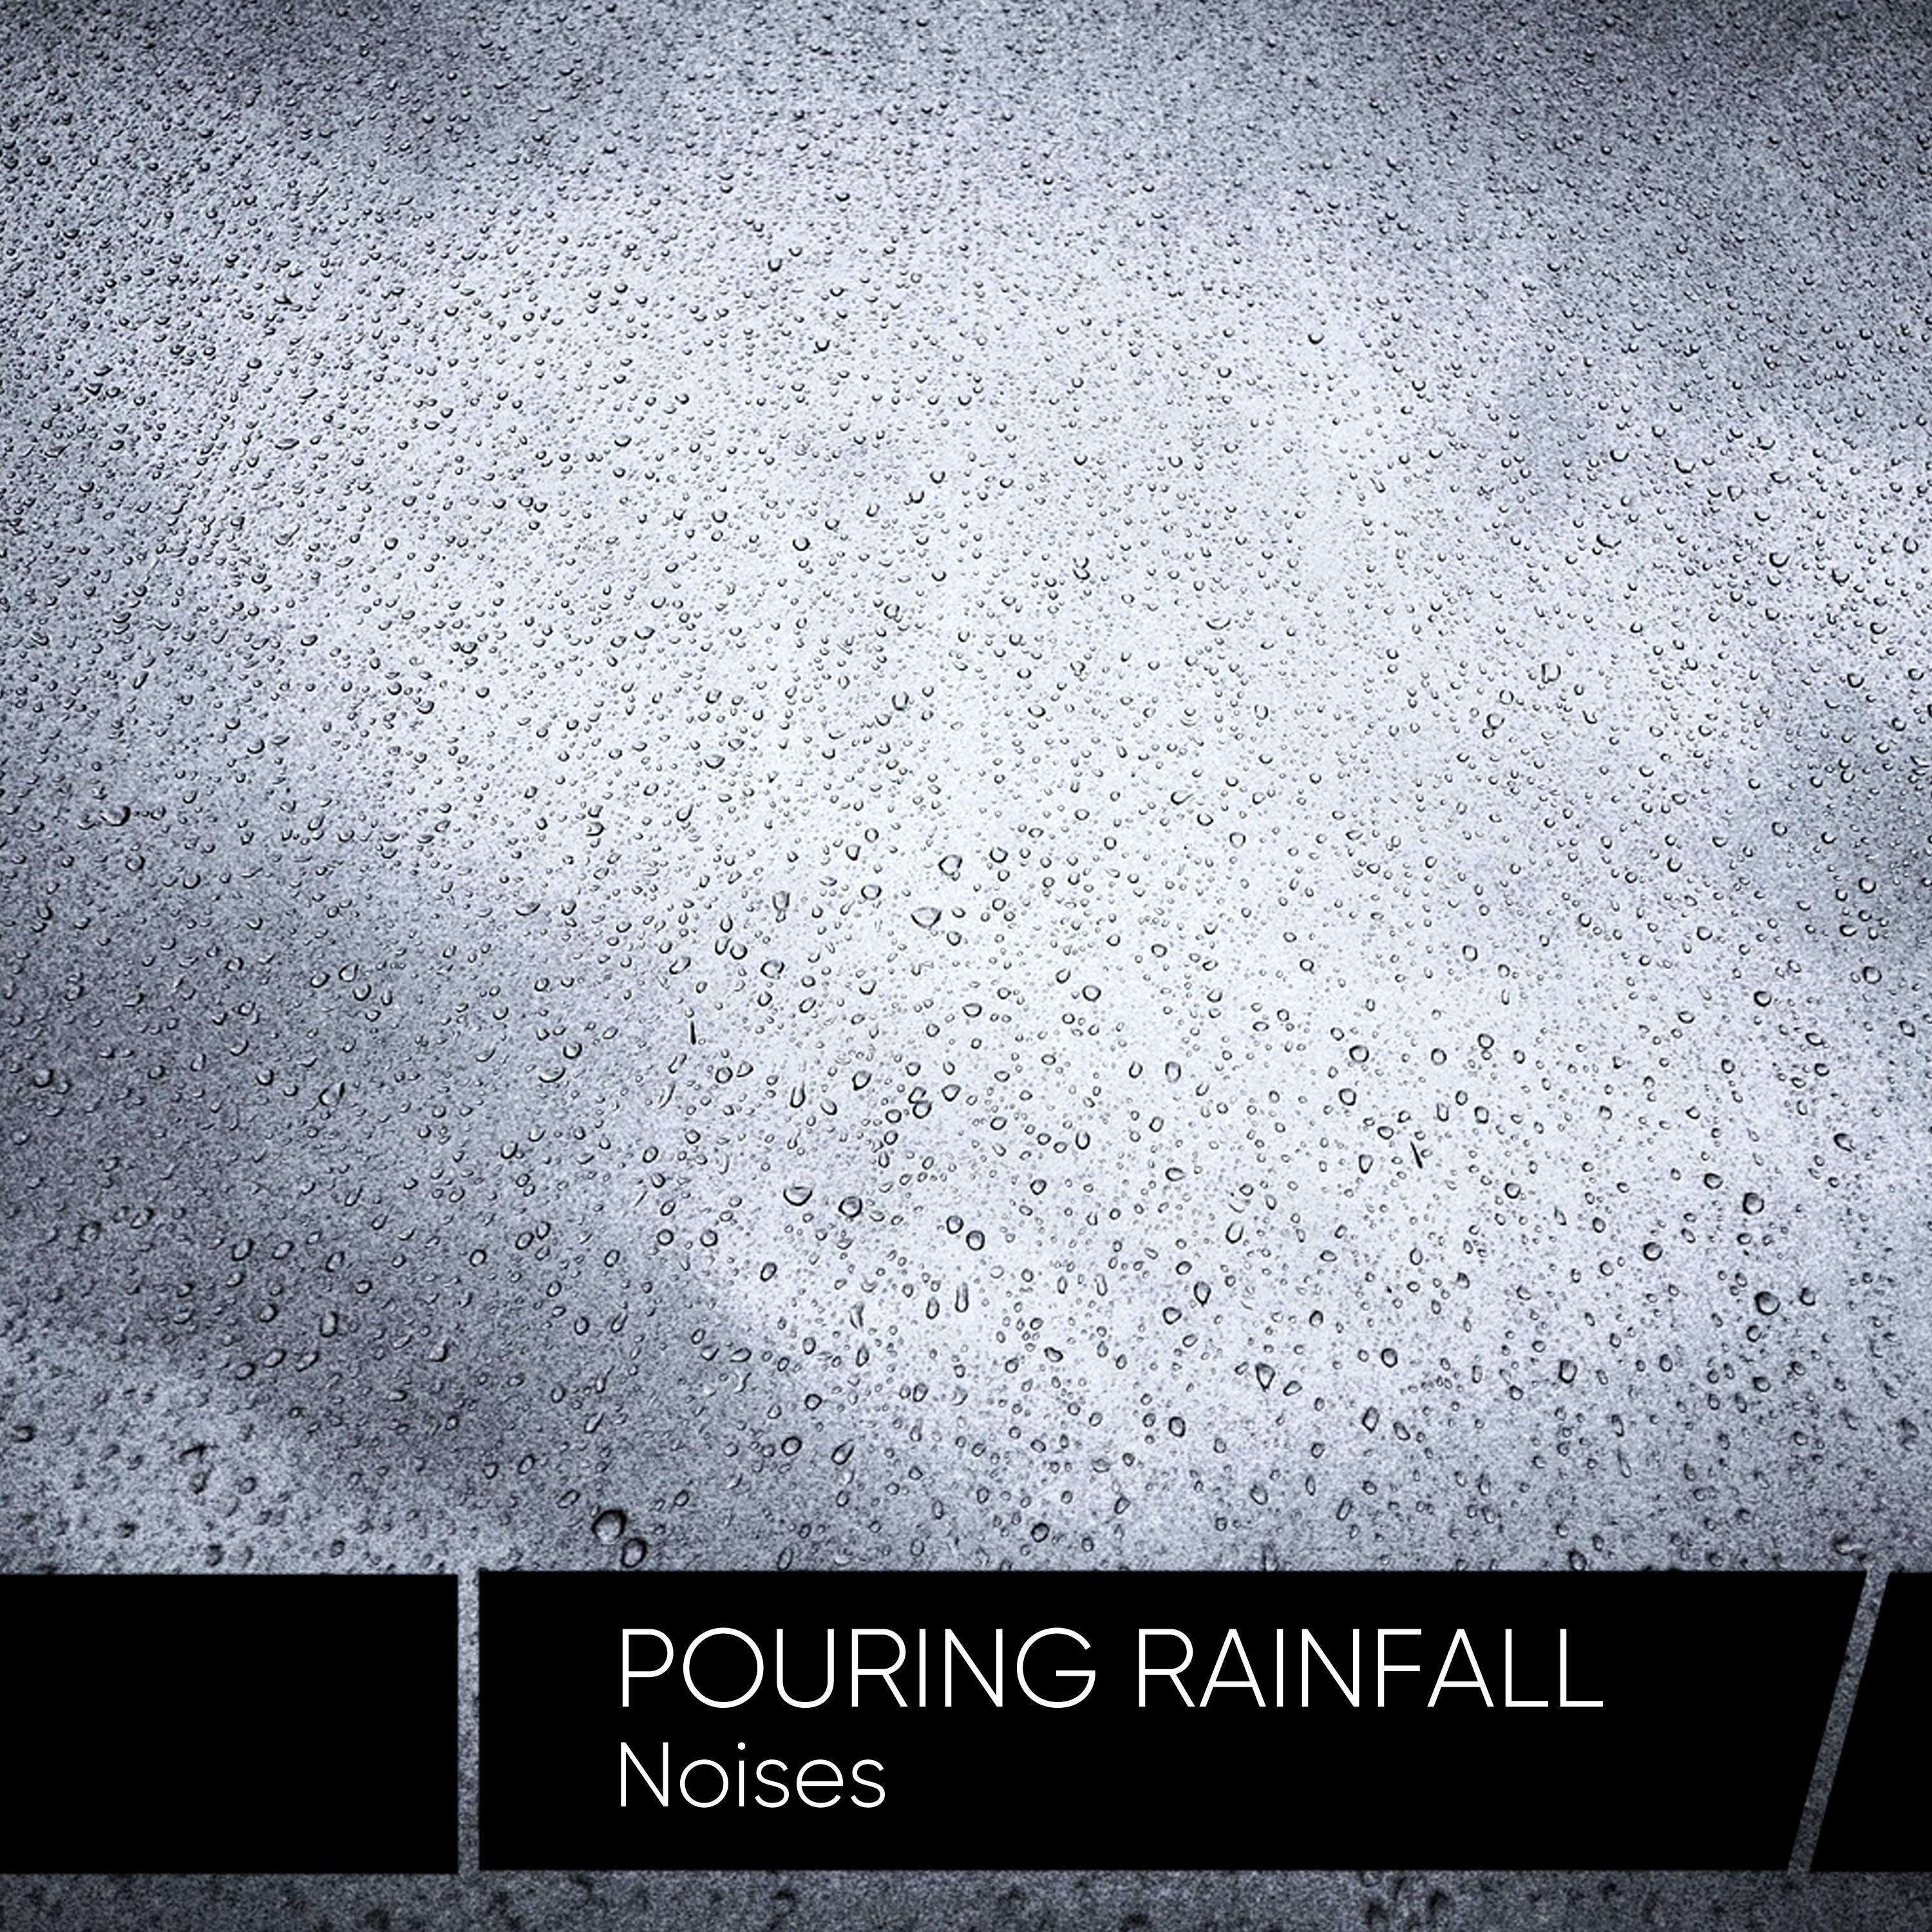 Pouring Rainfall Noises